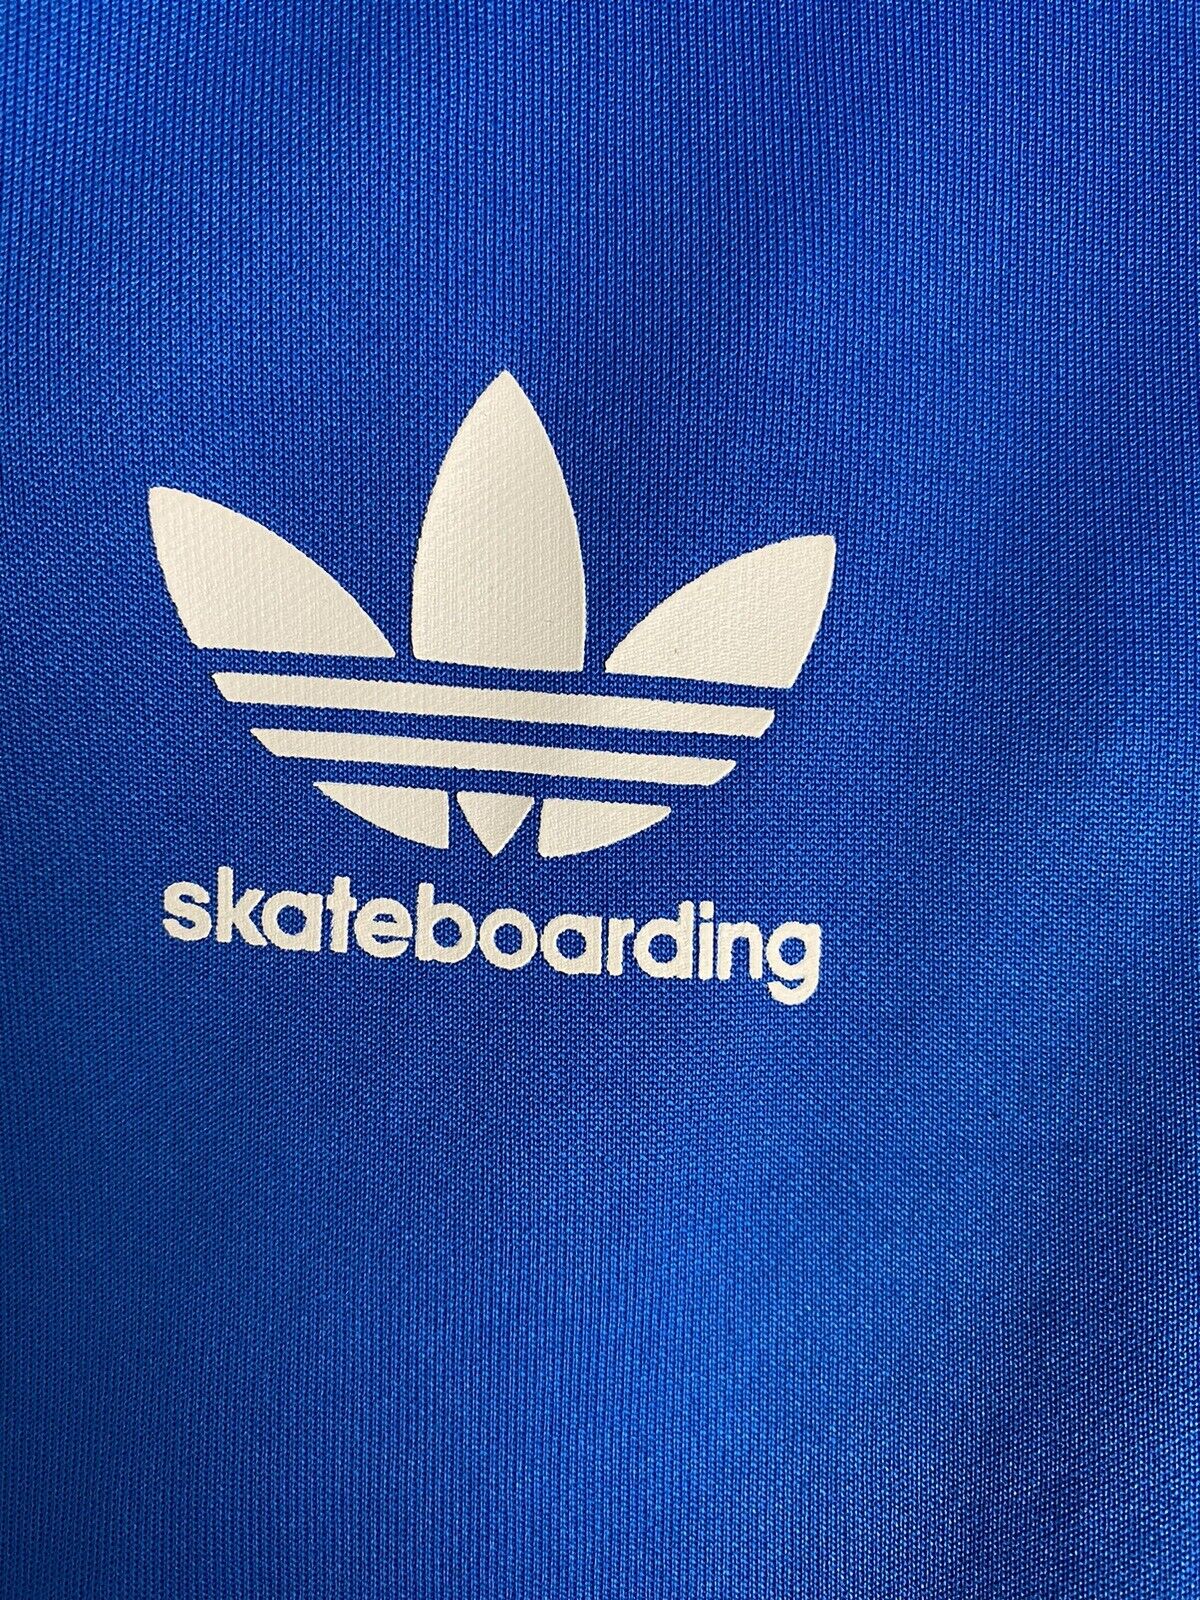 Adidas Skateboarding Wallpapers